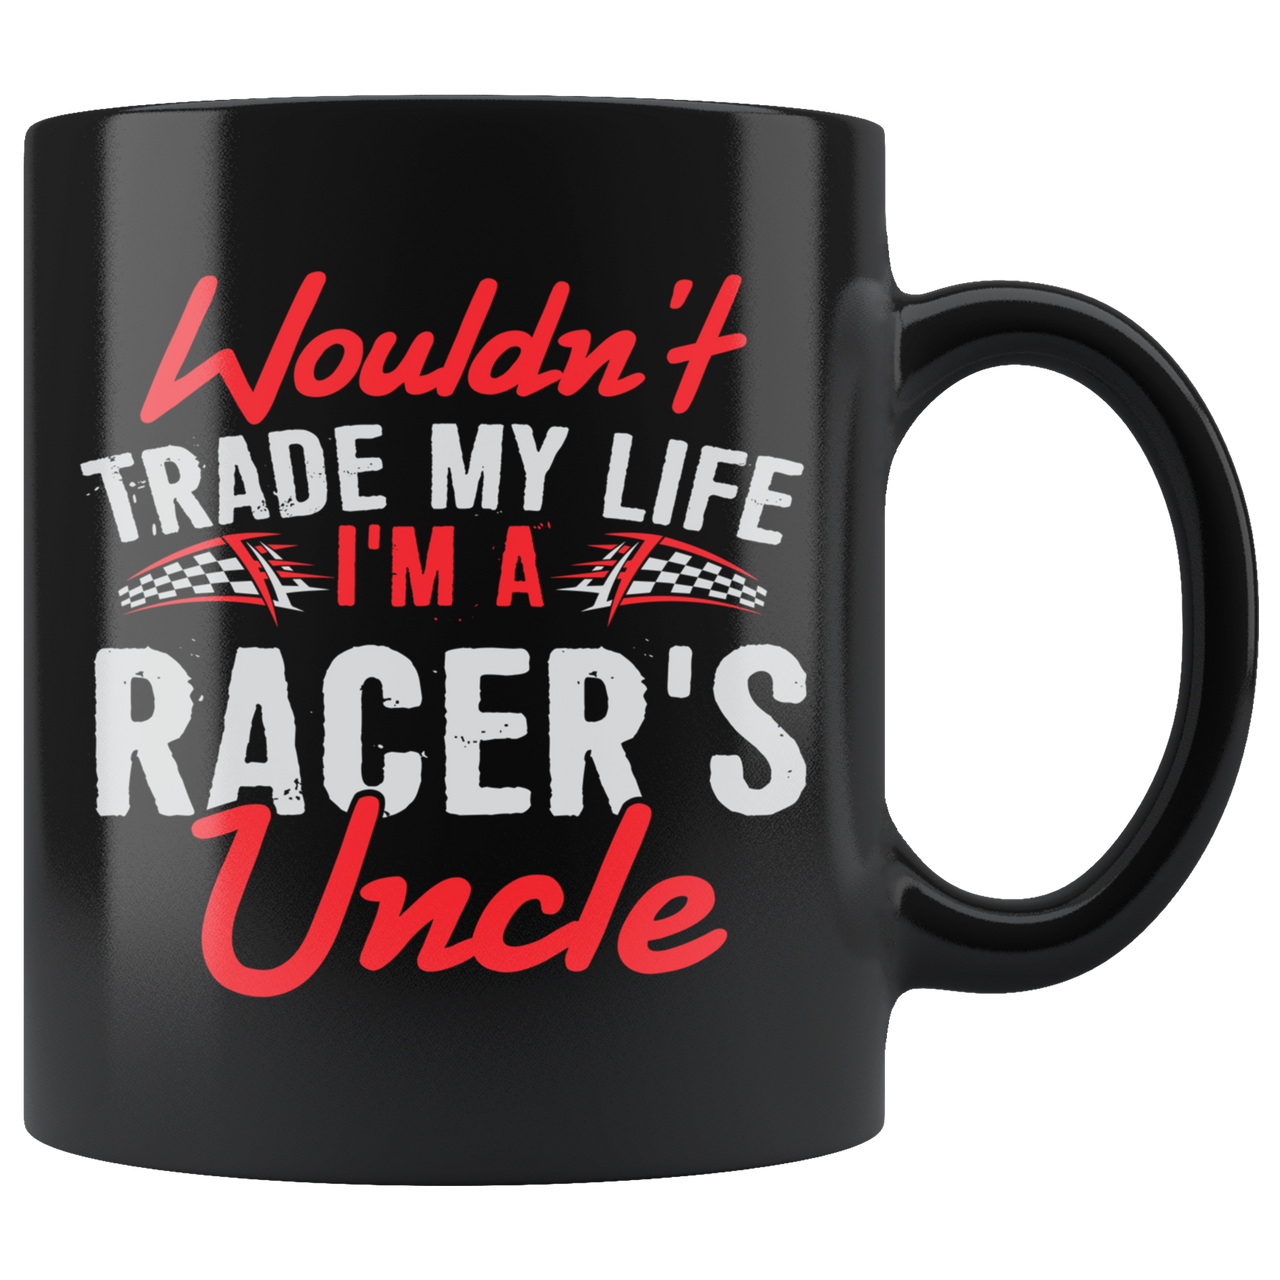 Wouldn't Trade My Life I'm A Racer's Uncle Mug!